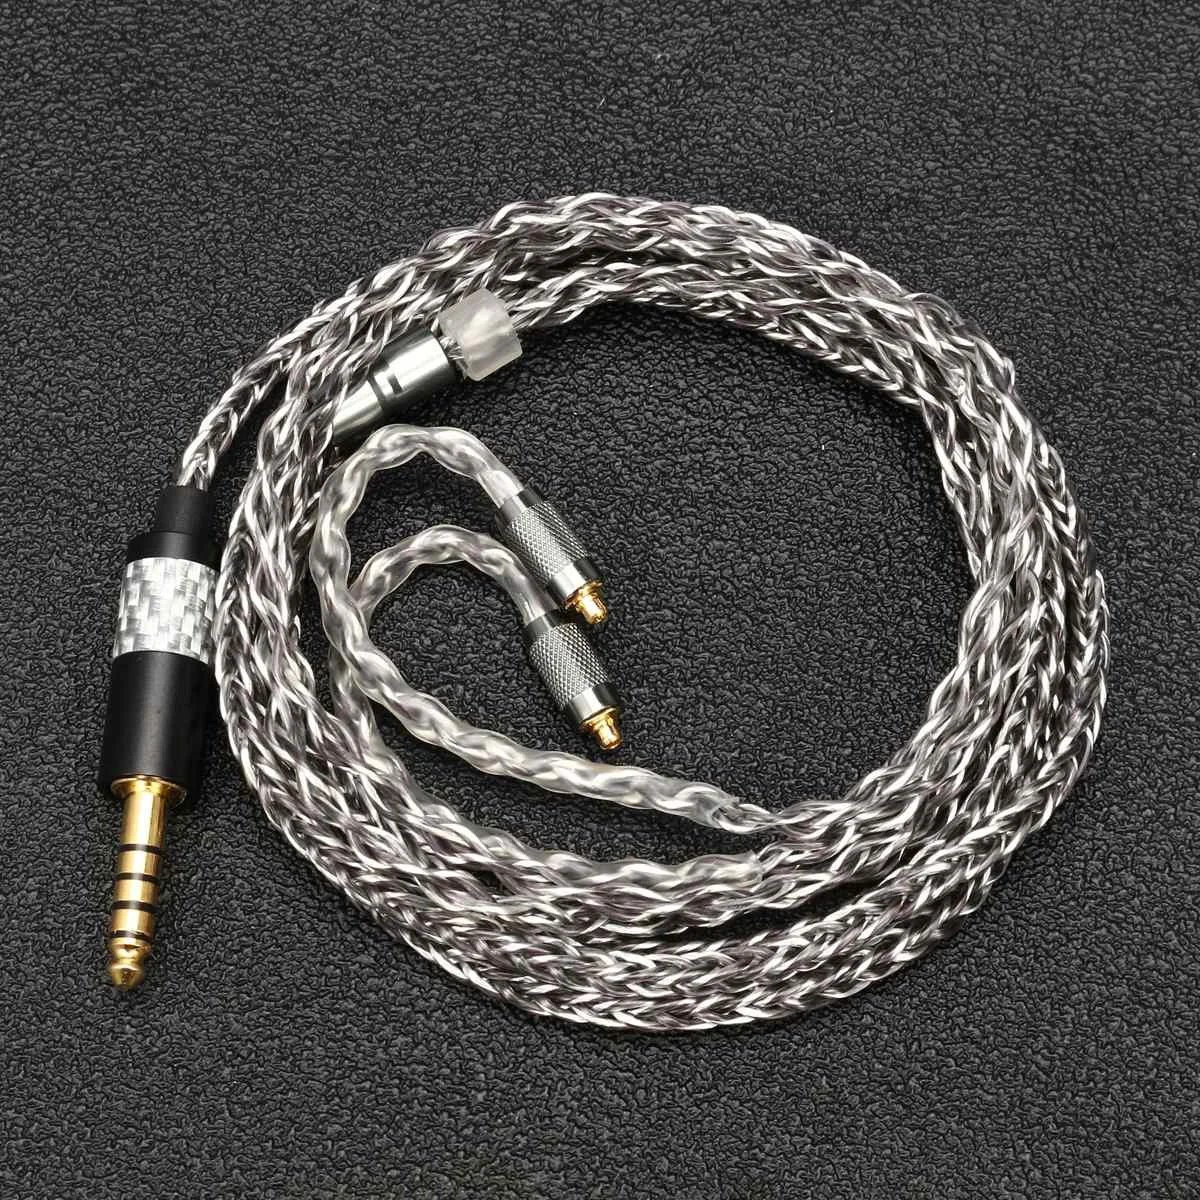 BGVP 400 провод OCC HiFi кабель для DM6 DMG DMS монитор наушники MMCX 0,78 мм наушники для меломанов кабель для наушников DIY - Цвет: 4.4mm mixed braided